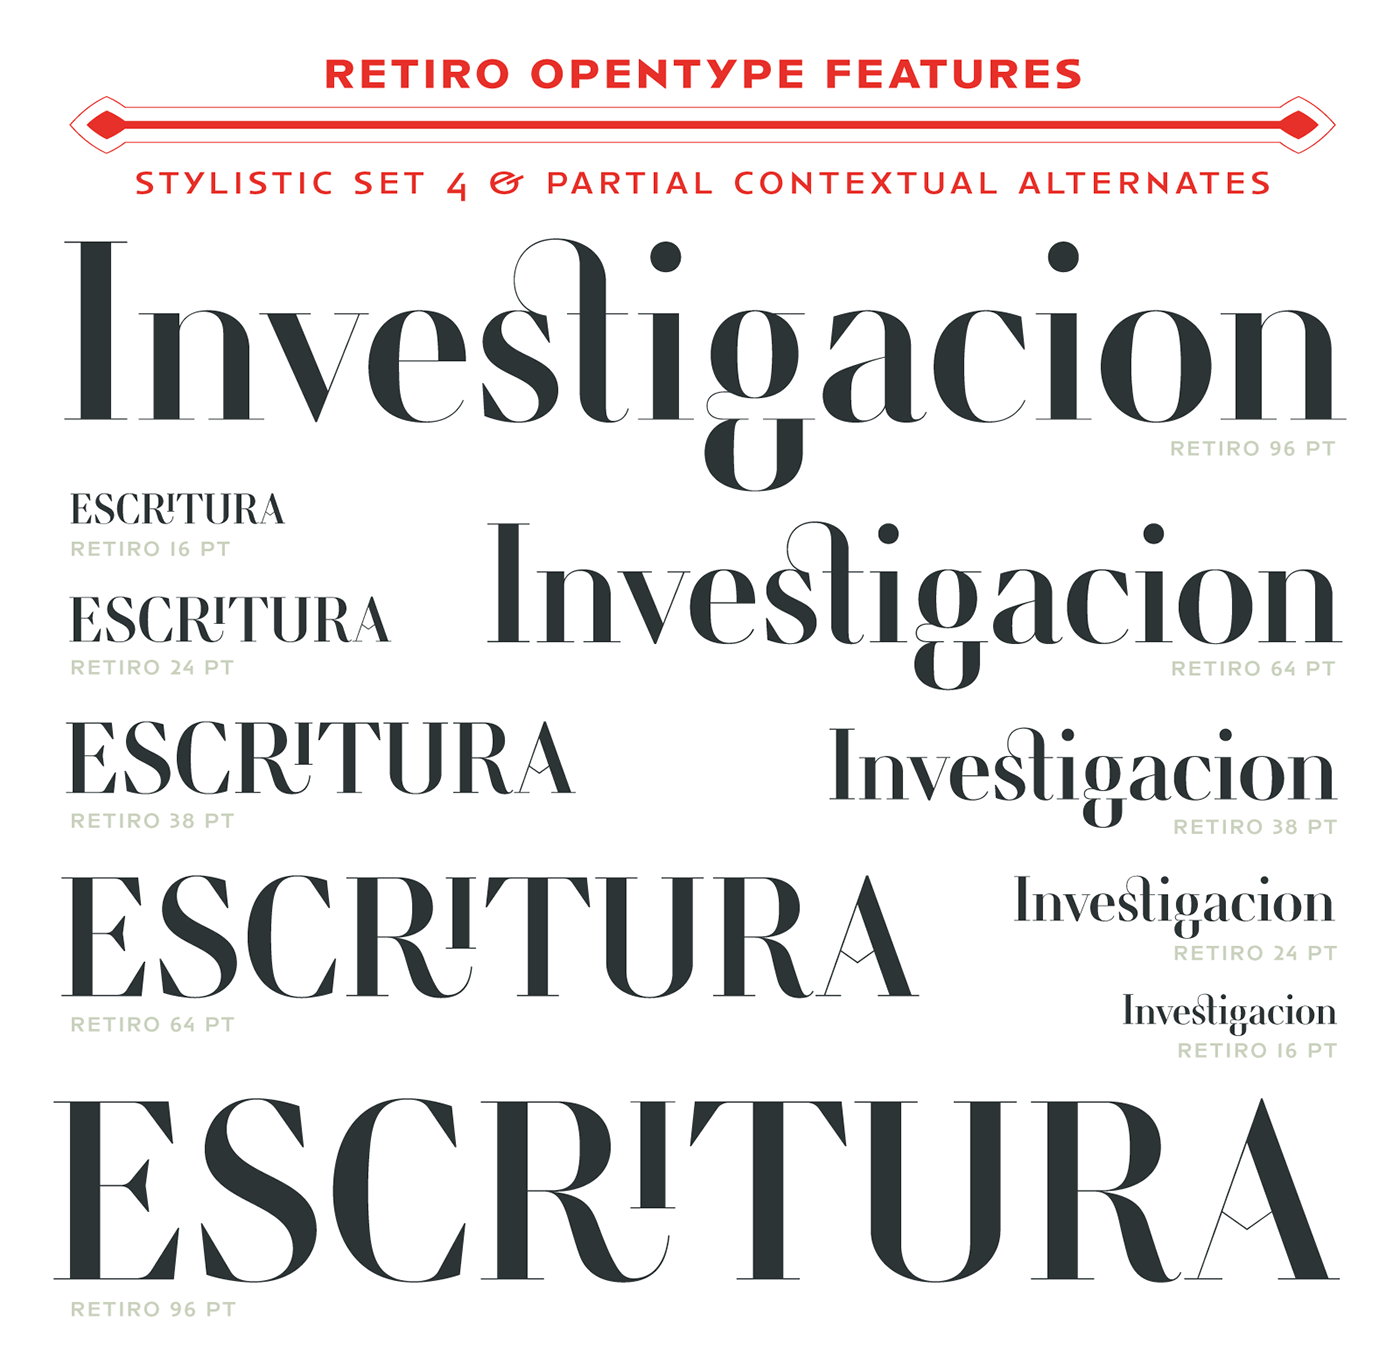 Typofonderie Jean Francois Porchez retiro font Opentype Didot hispanic serif optical size spanish madrid barcelona Display identity